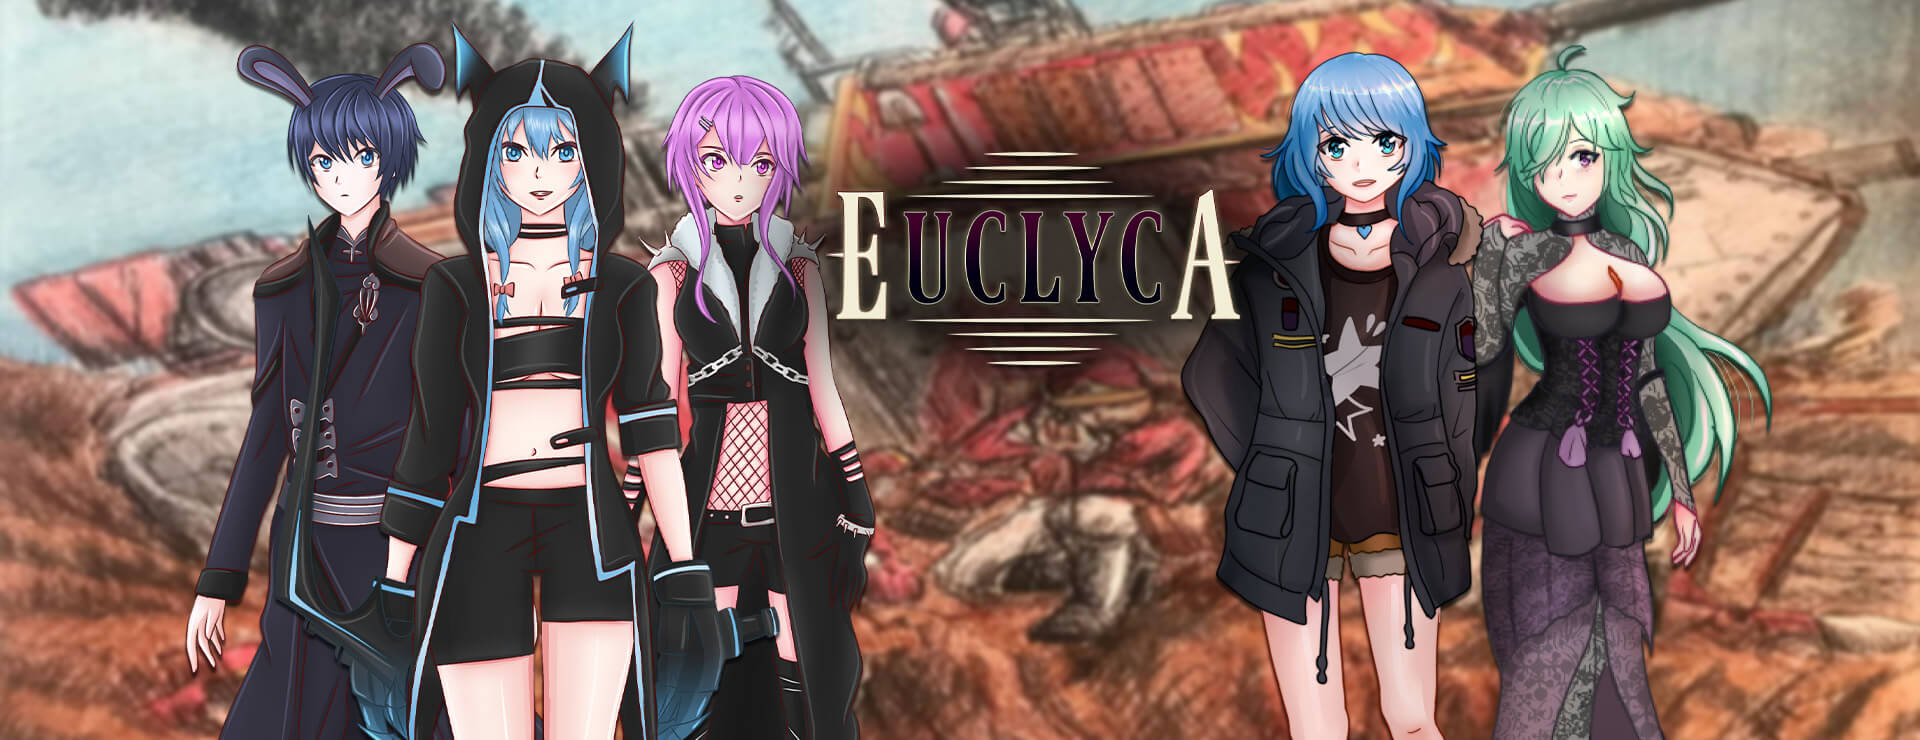 Euclyca - RPG ゲーム